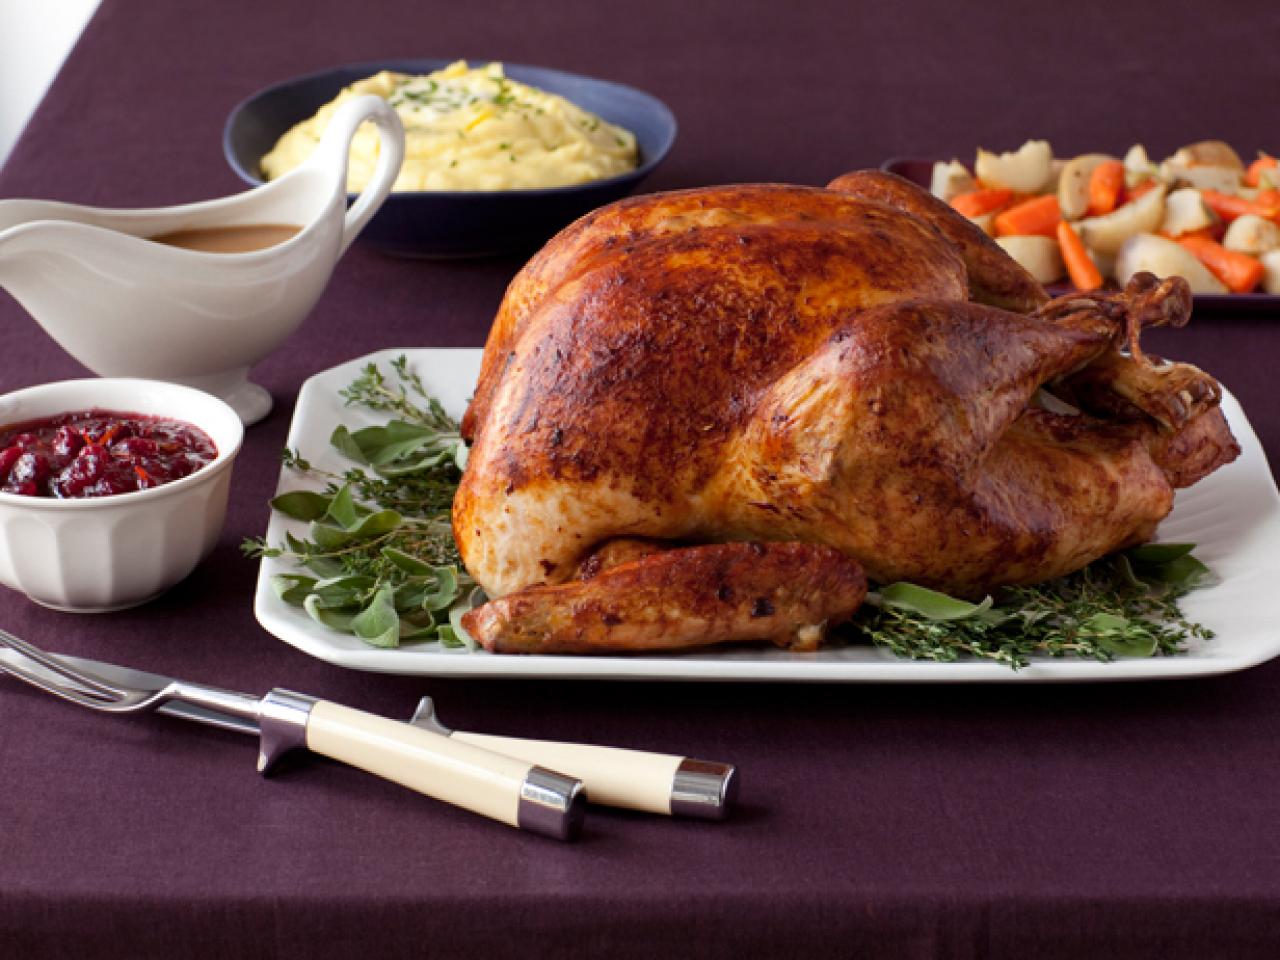 https://food.fnr.sndimg.com/content/dam/images/food/fullset/2010/8/12/0/FN-Thanksgiving-2010_Thanksgiving-Turkey_s4x3.jpg.rend.hgtvcom.1280.960.suffix/1382539519750.jpeg